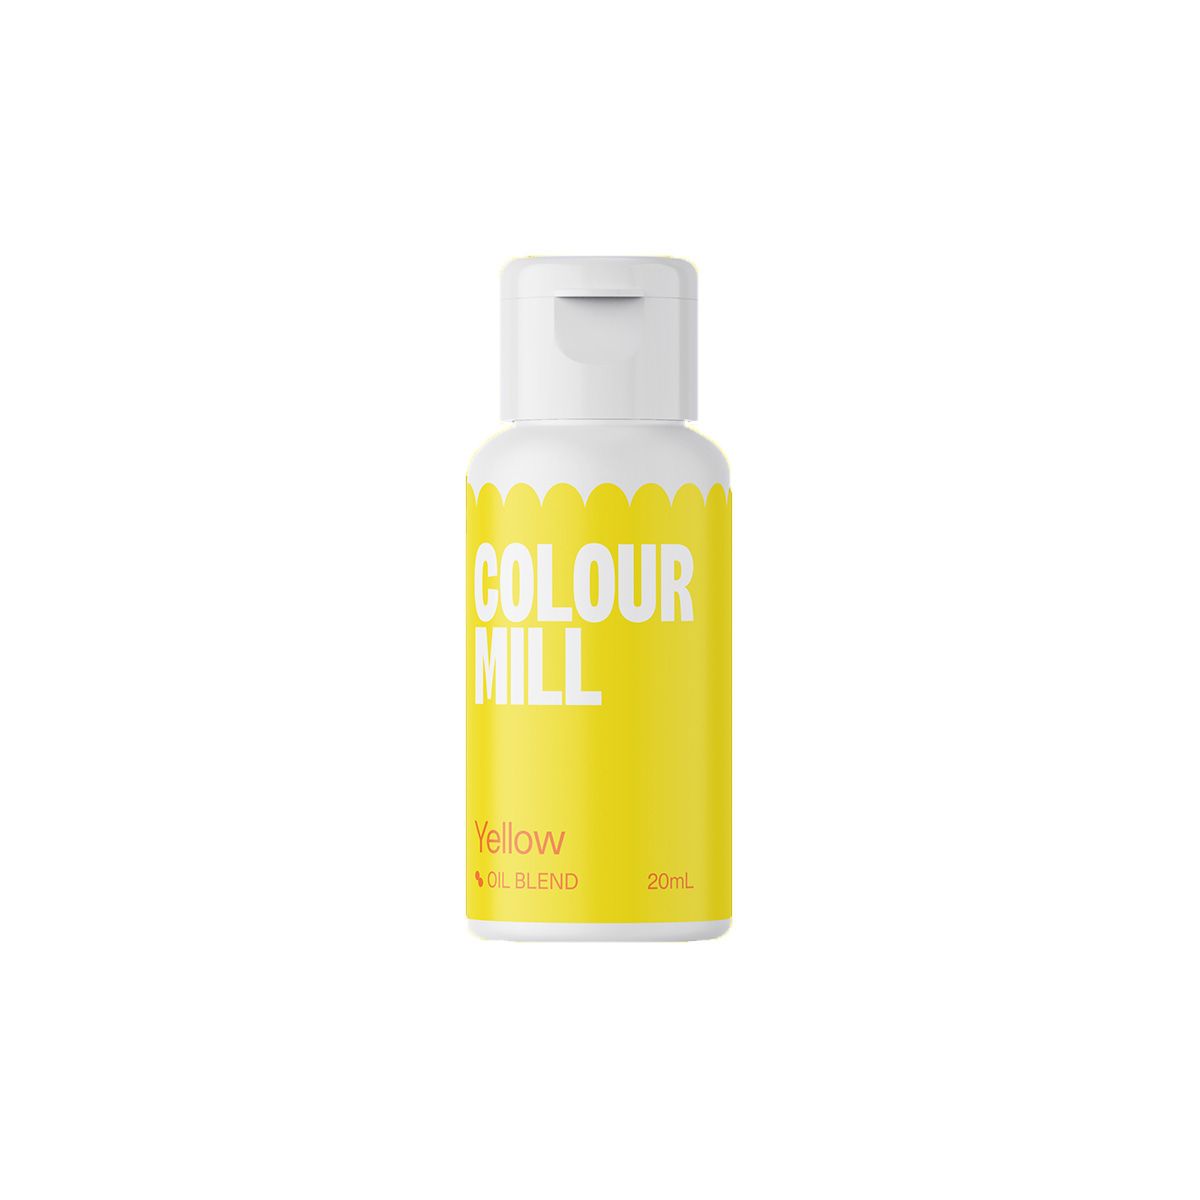 Blend Yellow - Colour Mill, 20ml